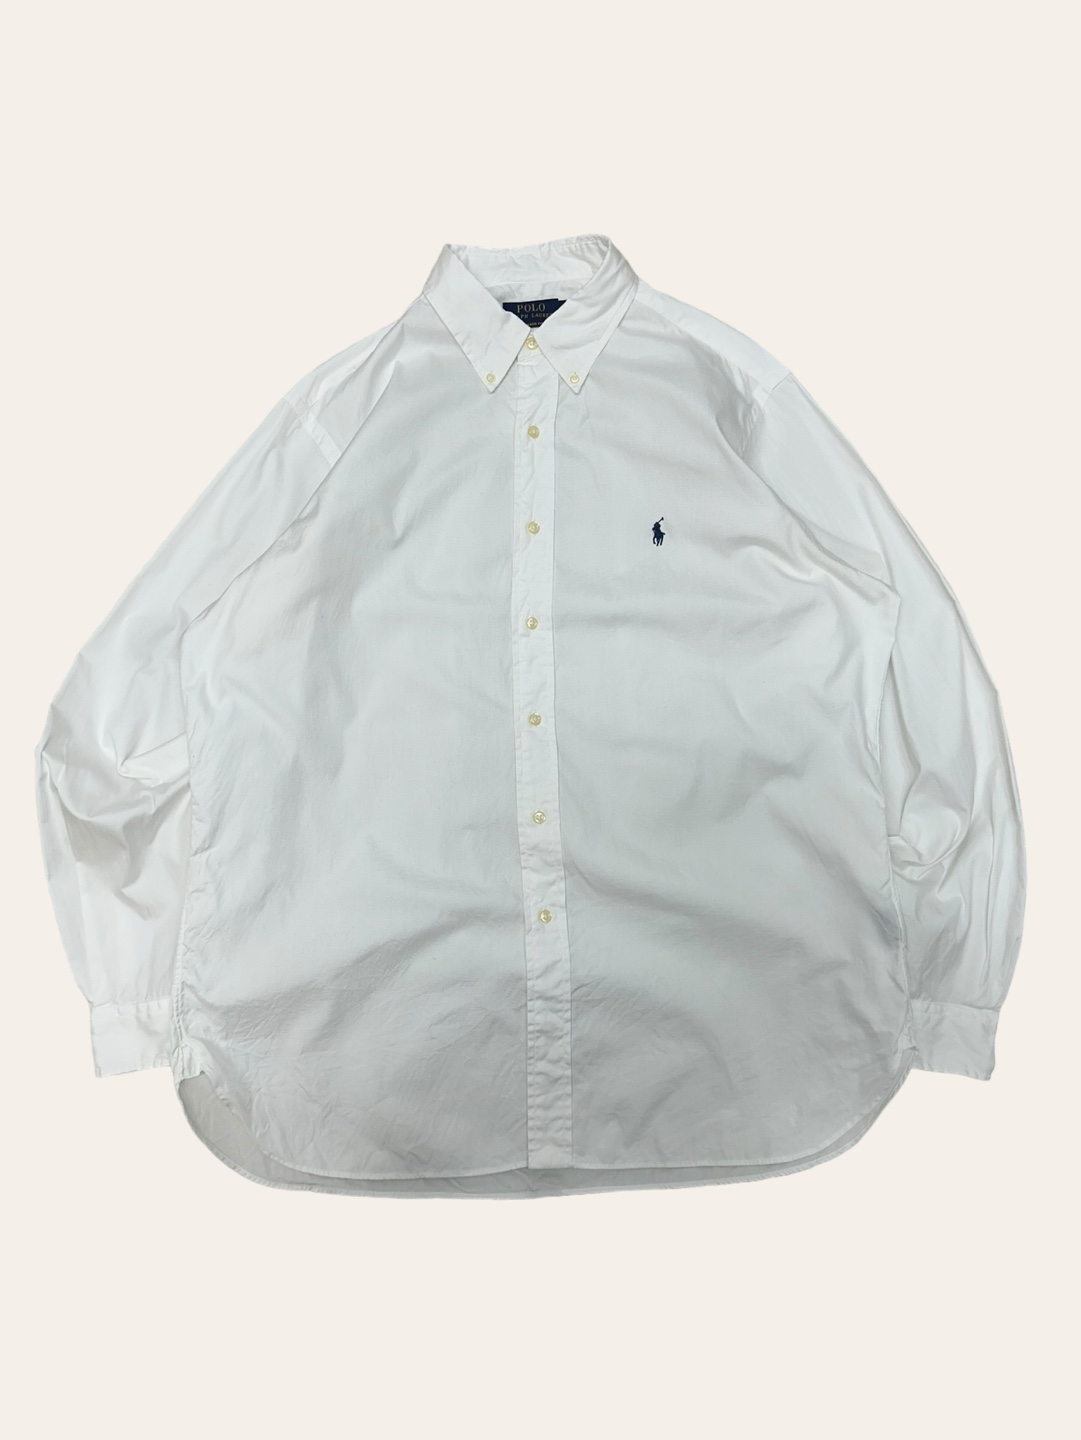 (From USA)Polo ralph lauren white poplin shirt 17